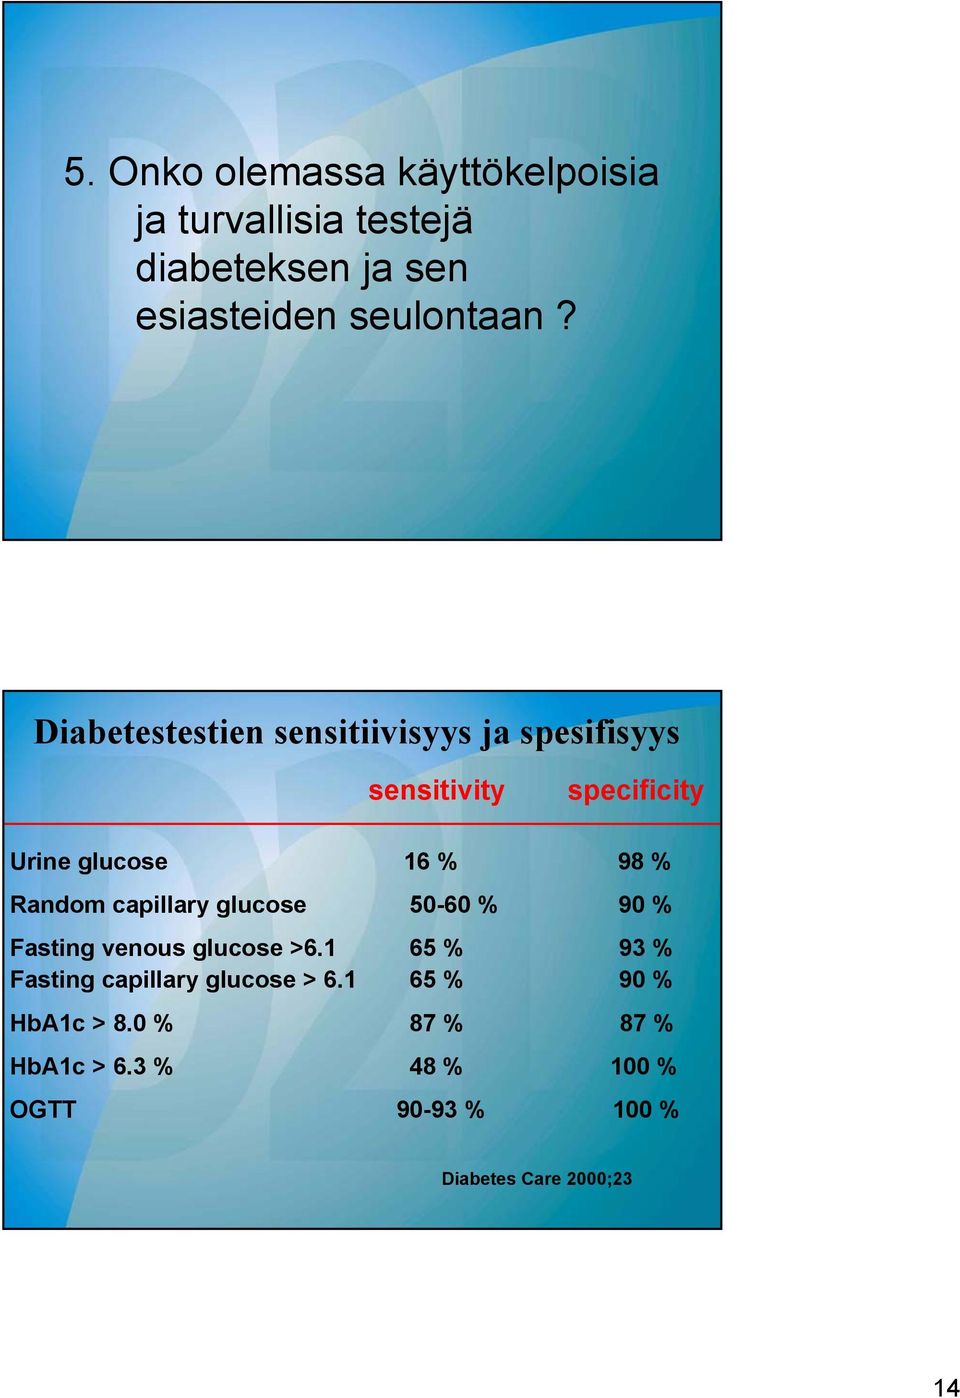 capillary glucose 50-60 % 90 % Fasting venous glucose >6.1 65 % 93 % Fasting capillary glucose > 6.